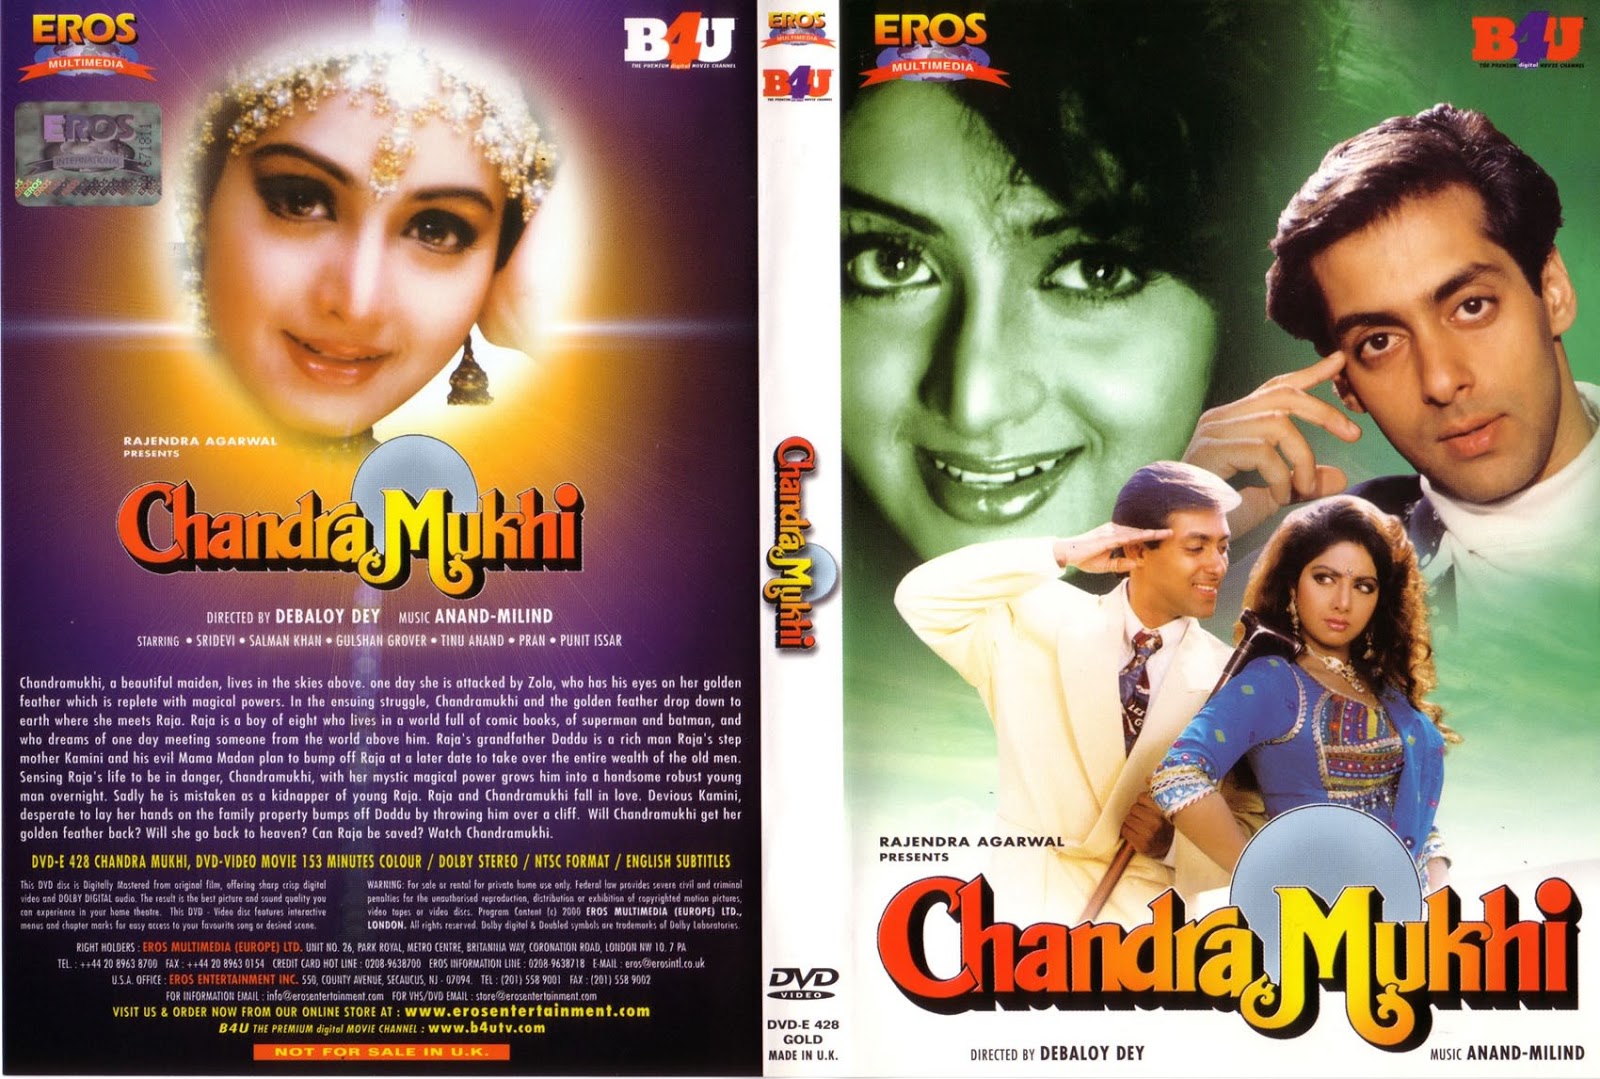 CHANDRA MUKHI (1993) con SALMAN KHAN + Vídeos Musicales + Sub. Español Chandra+Mukhi+(1993)1111